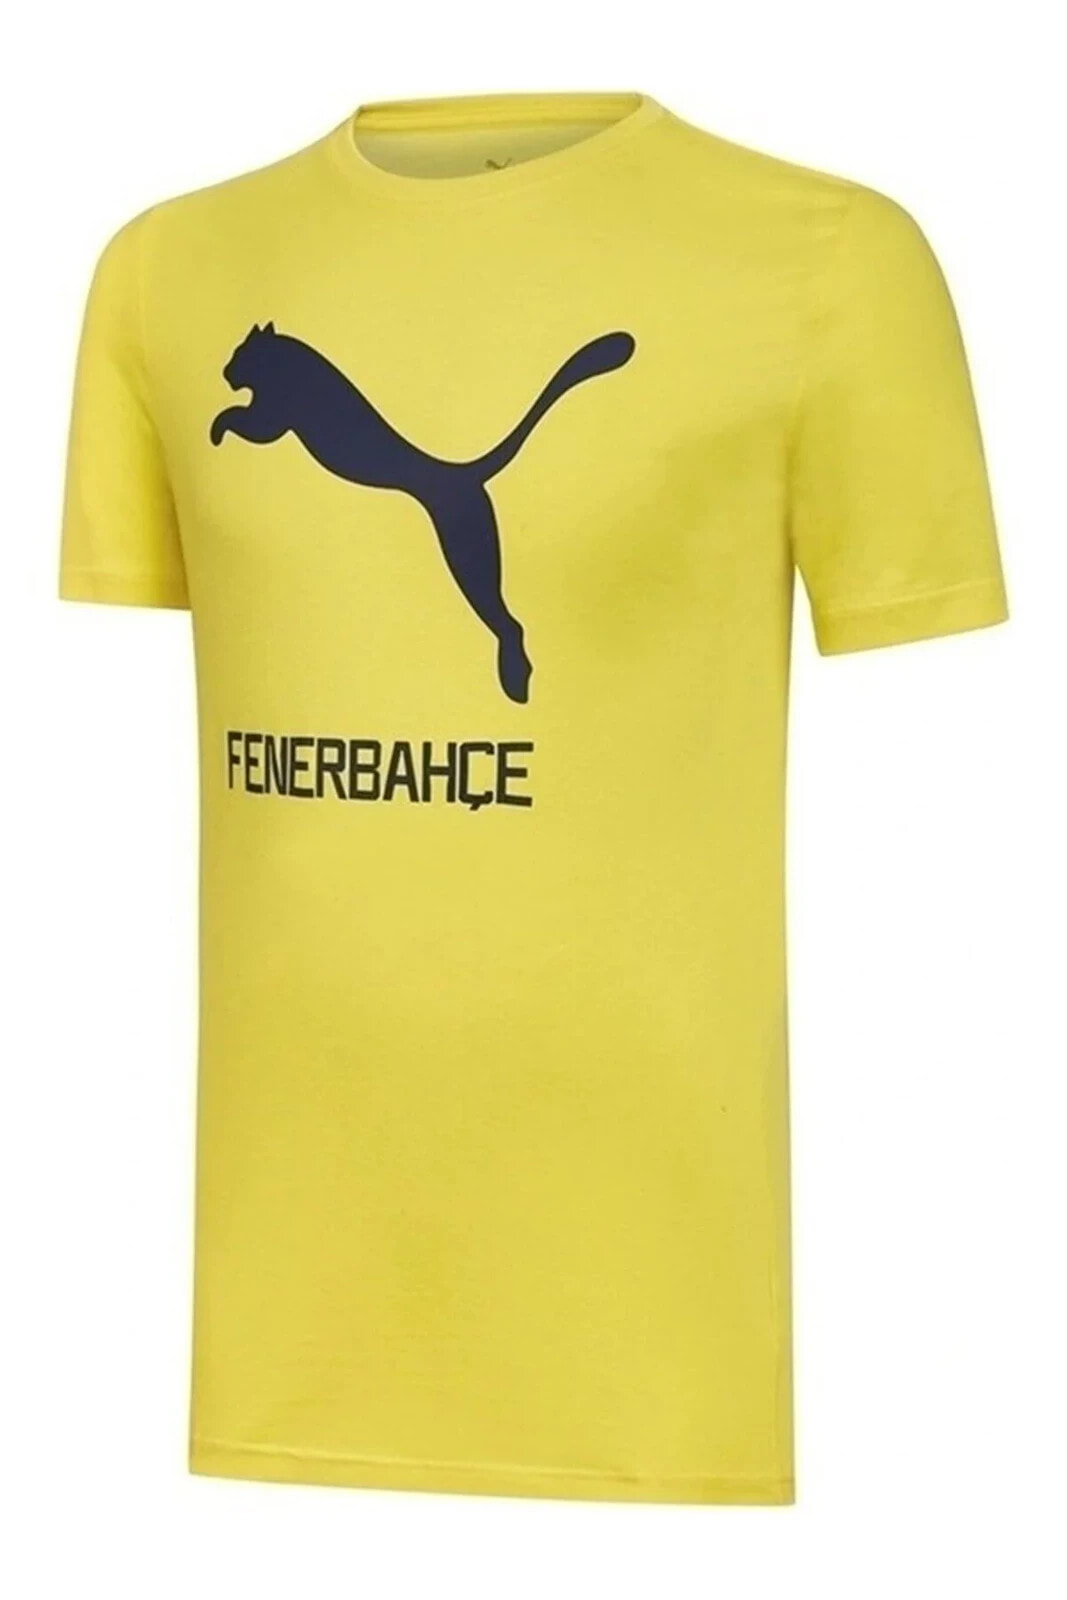 Fenerbahçe Forma Sarı Tshırt-77313603